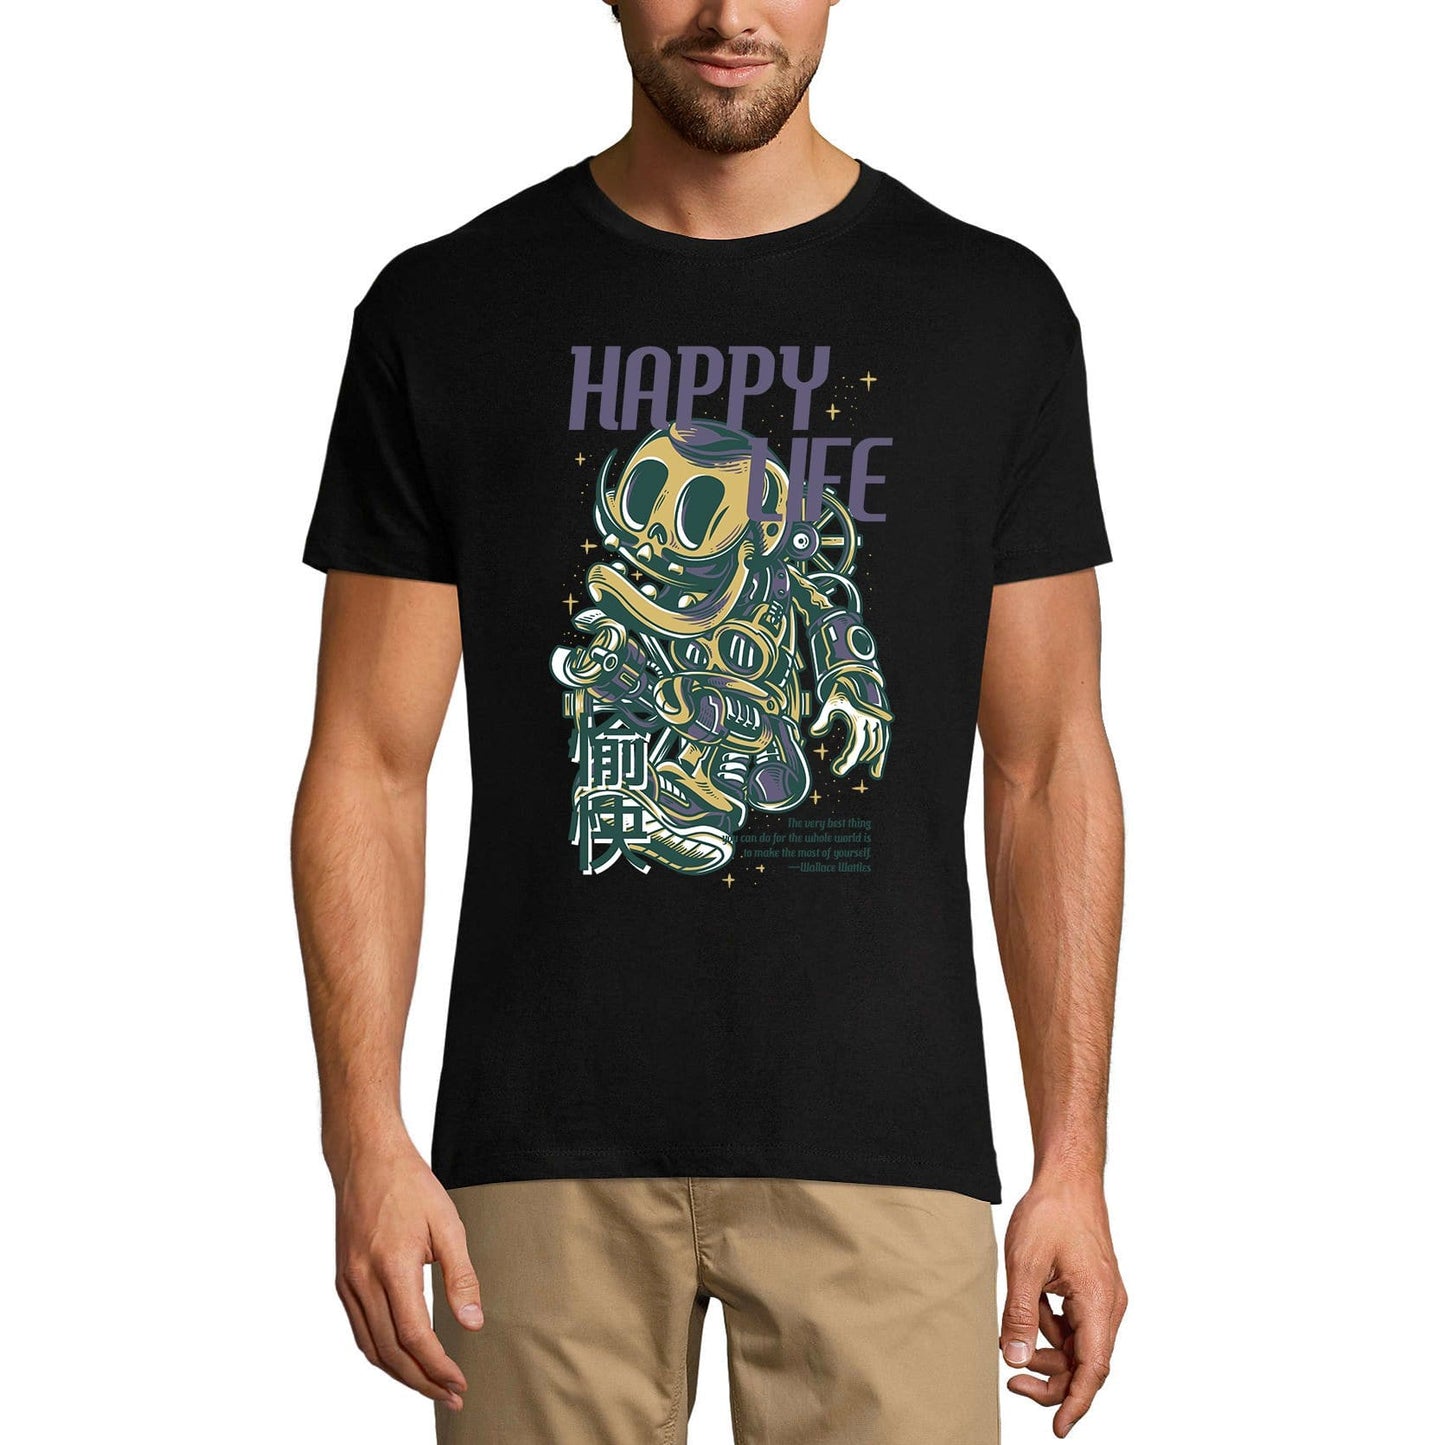 ULTRABASIC Men's Novelty T-Shirt Happy Life - Funny Short Sleeve Tee Shirt